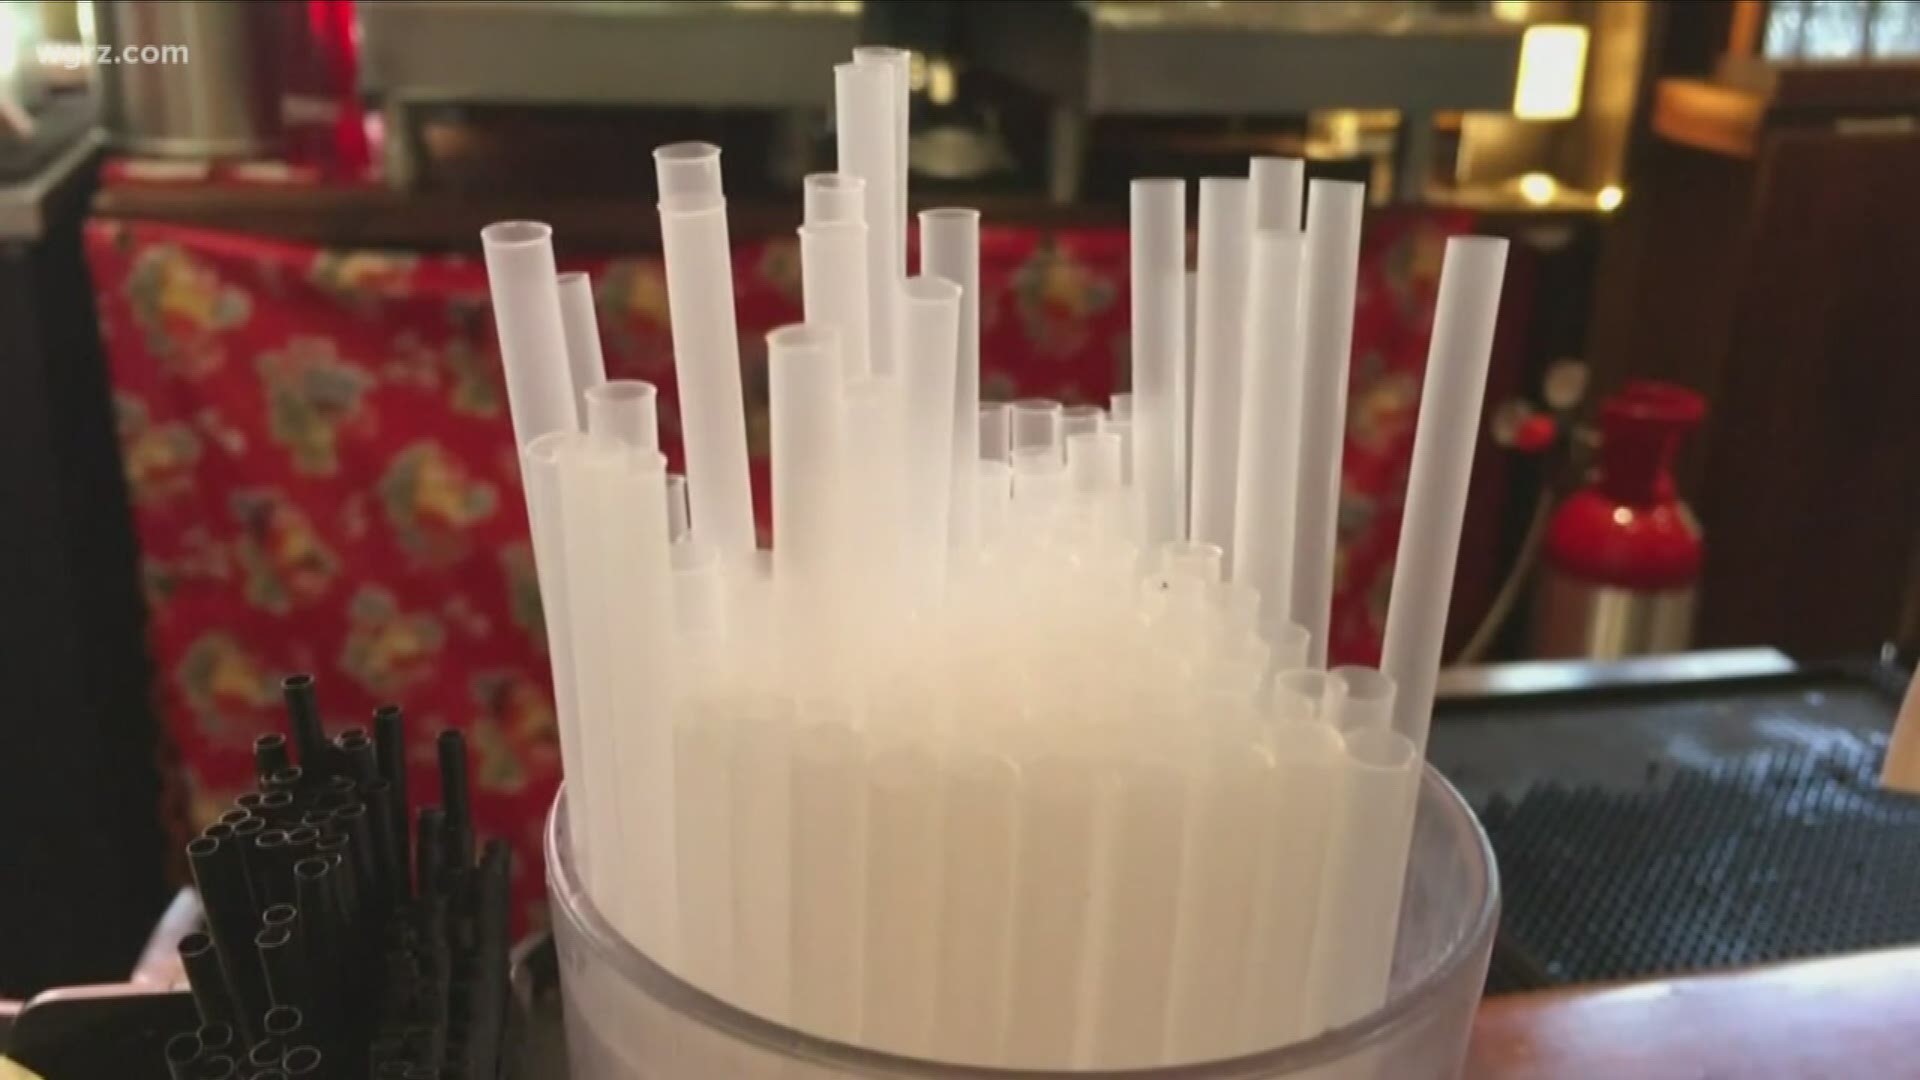 East Aurora Passes Plastic Straw Ban